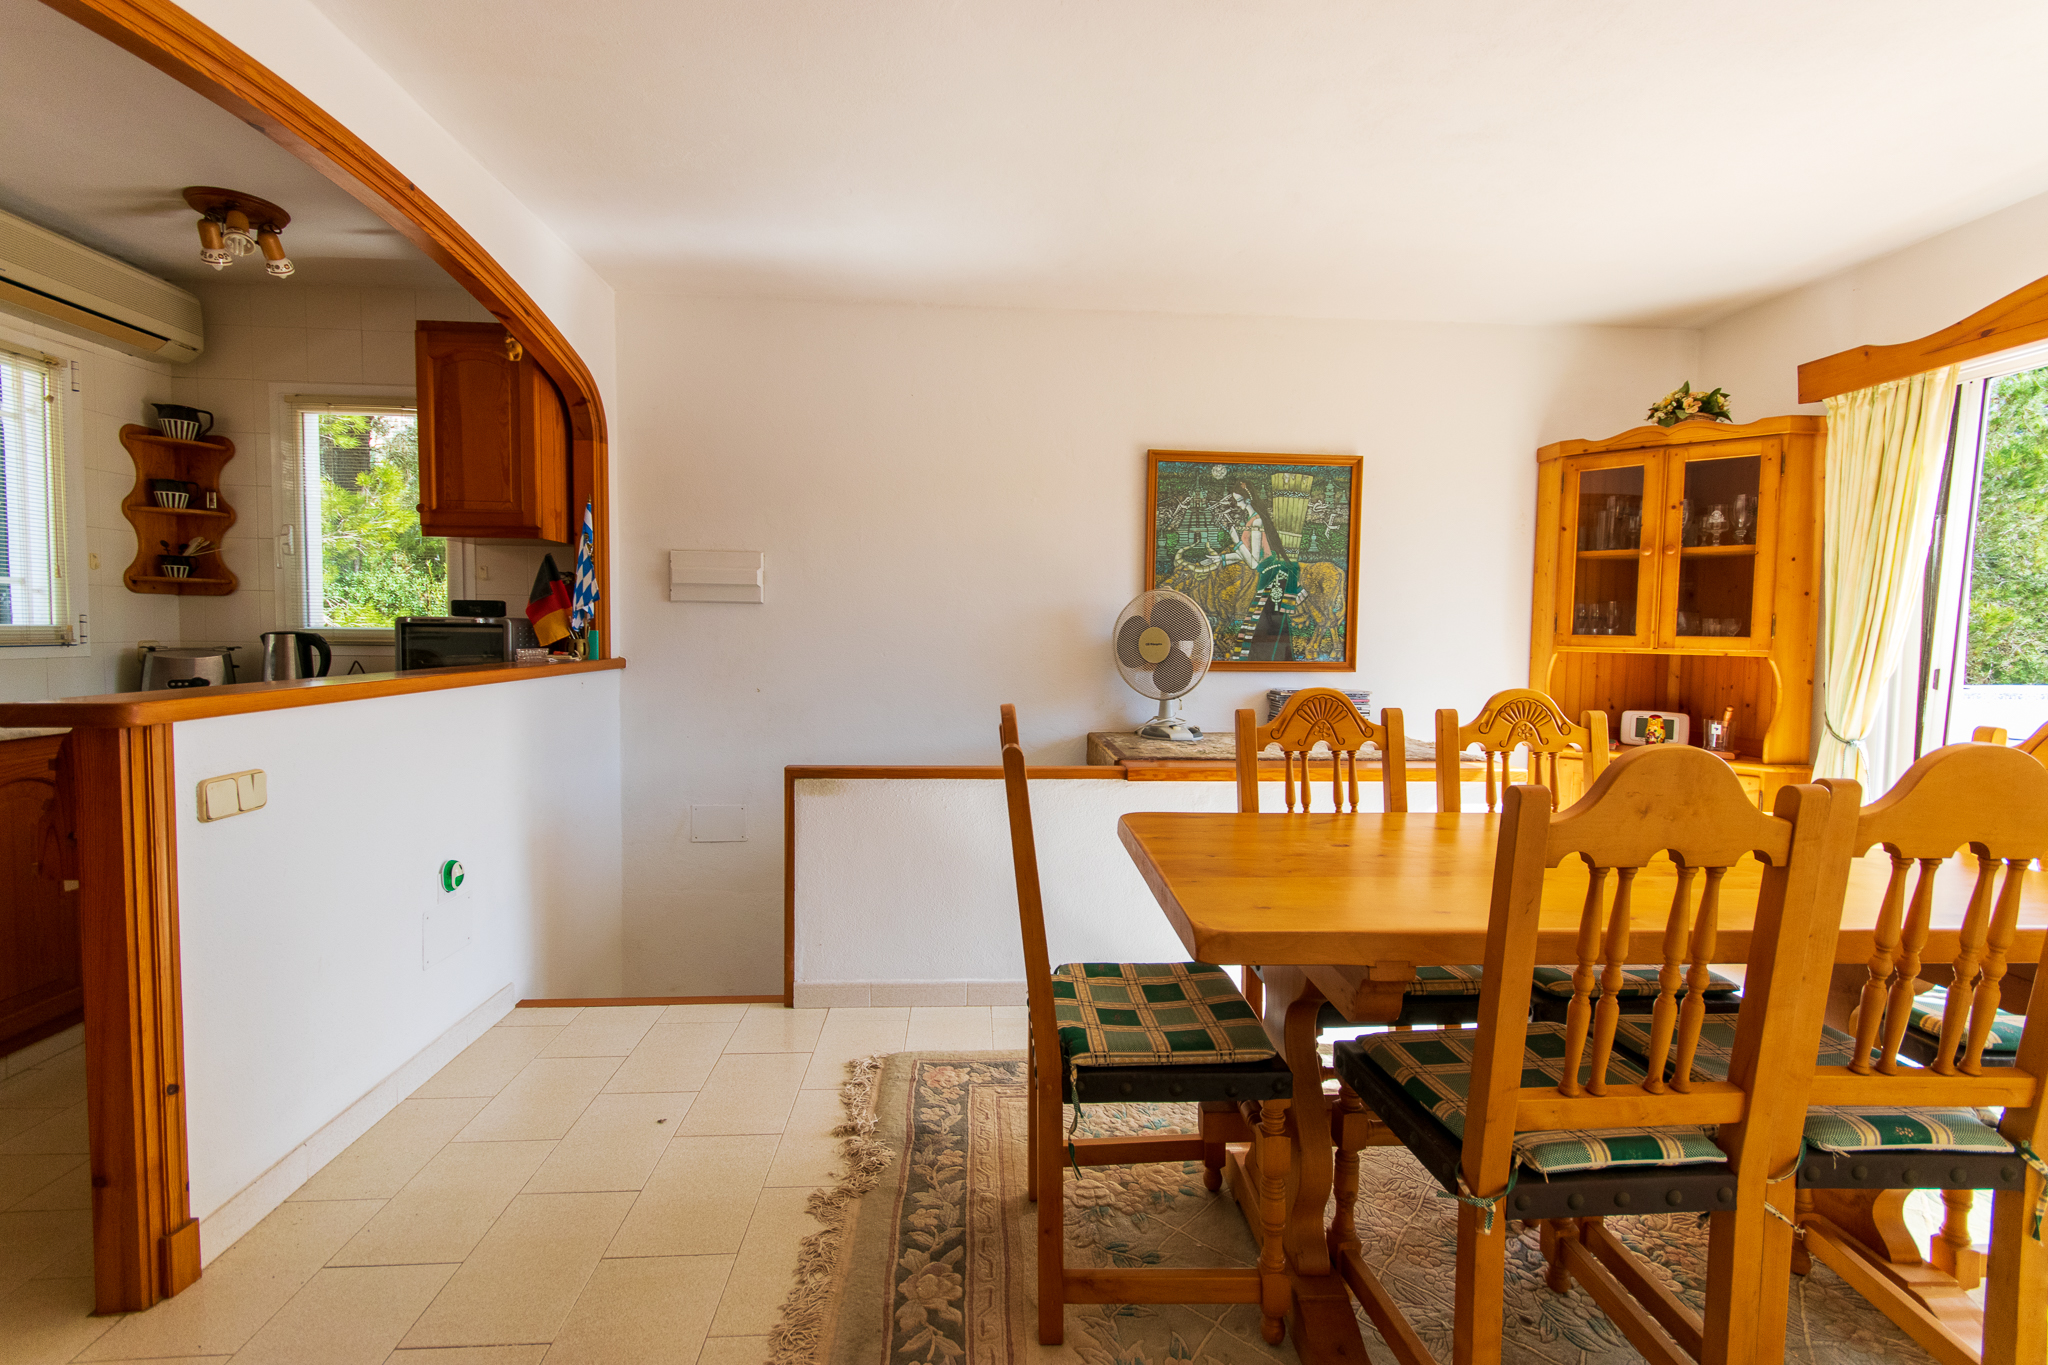 Duplex dining room with good views in Cala Galdana